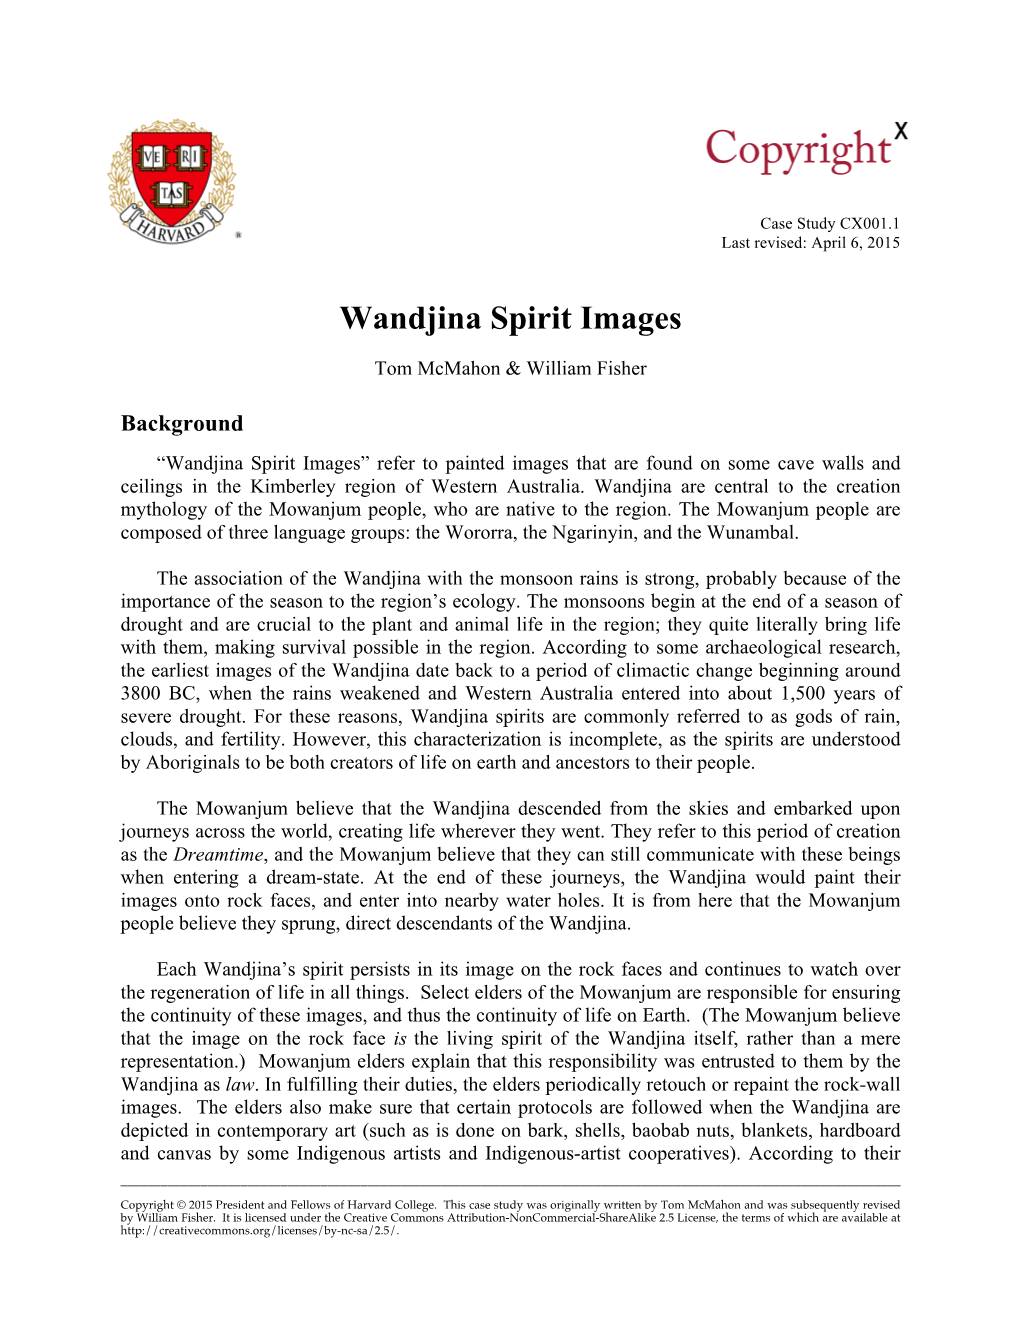 Wandjina Spirit Images